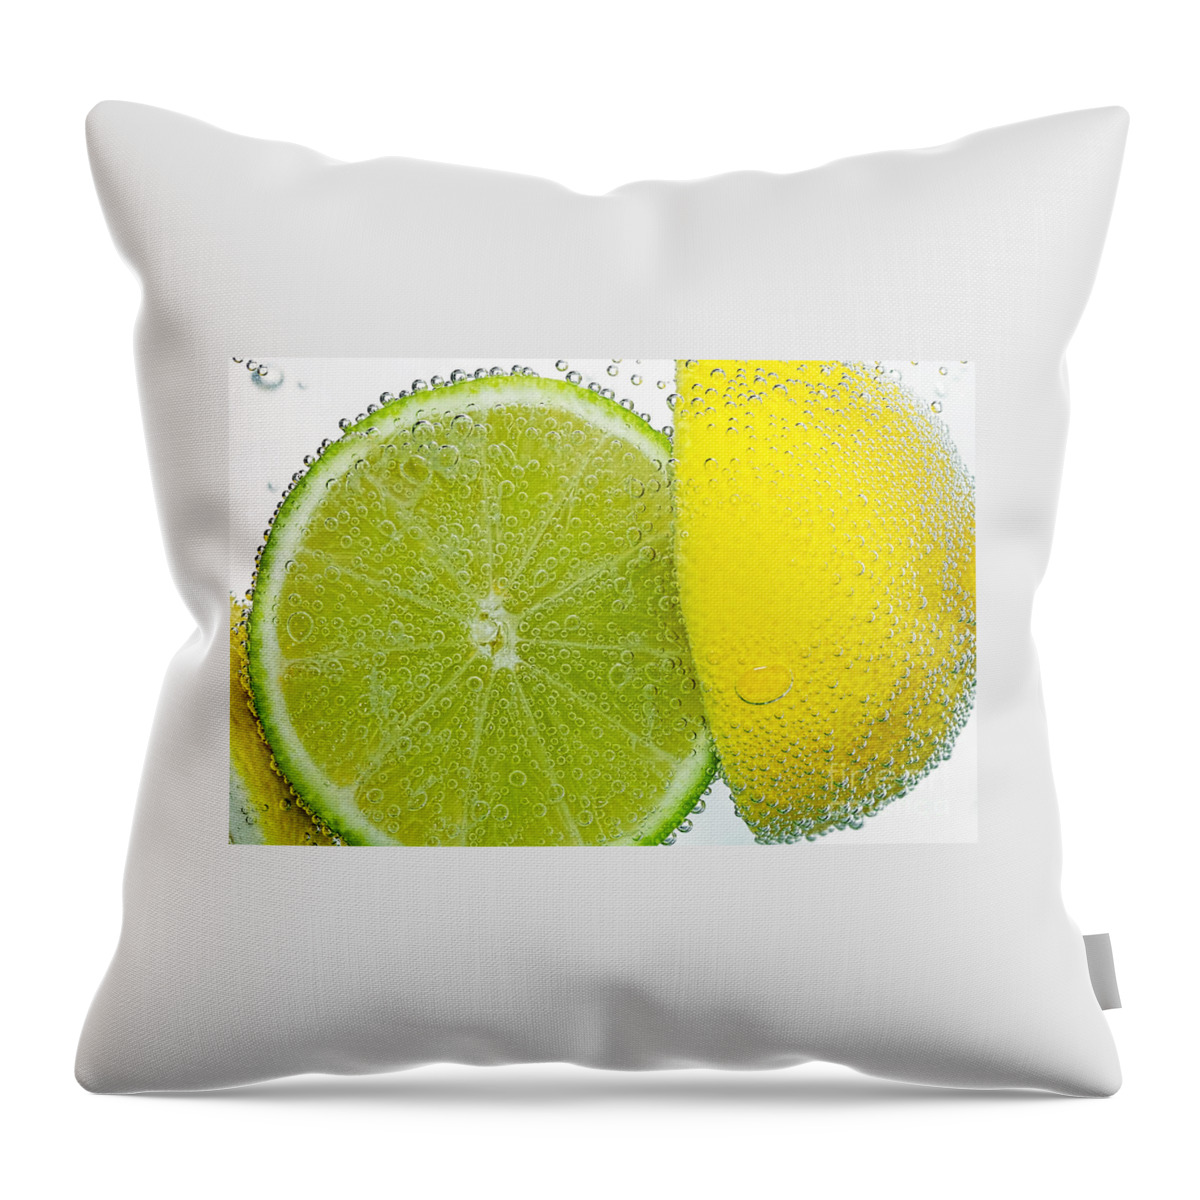 Effervescent Lime And Lemon Throw Pillow featuring the photograph Effervescent Lime and Lemon by Kaye Menner by Kaye Menner